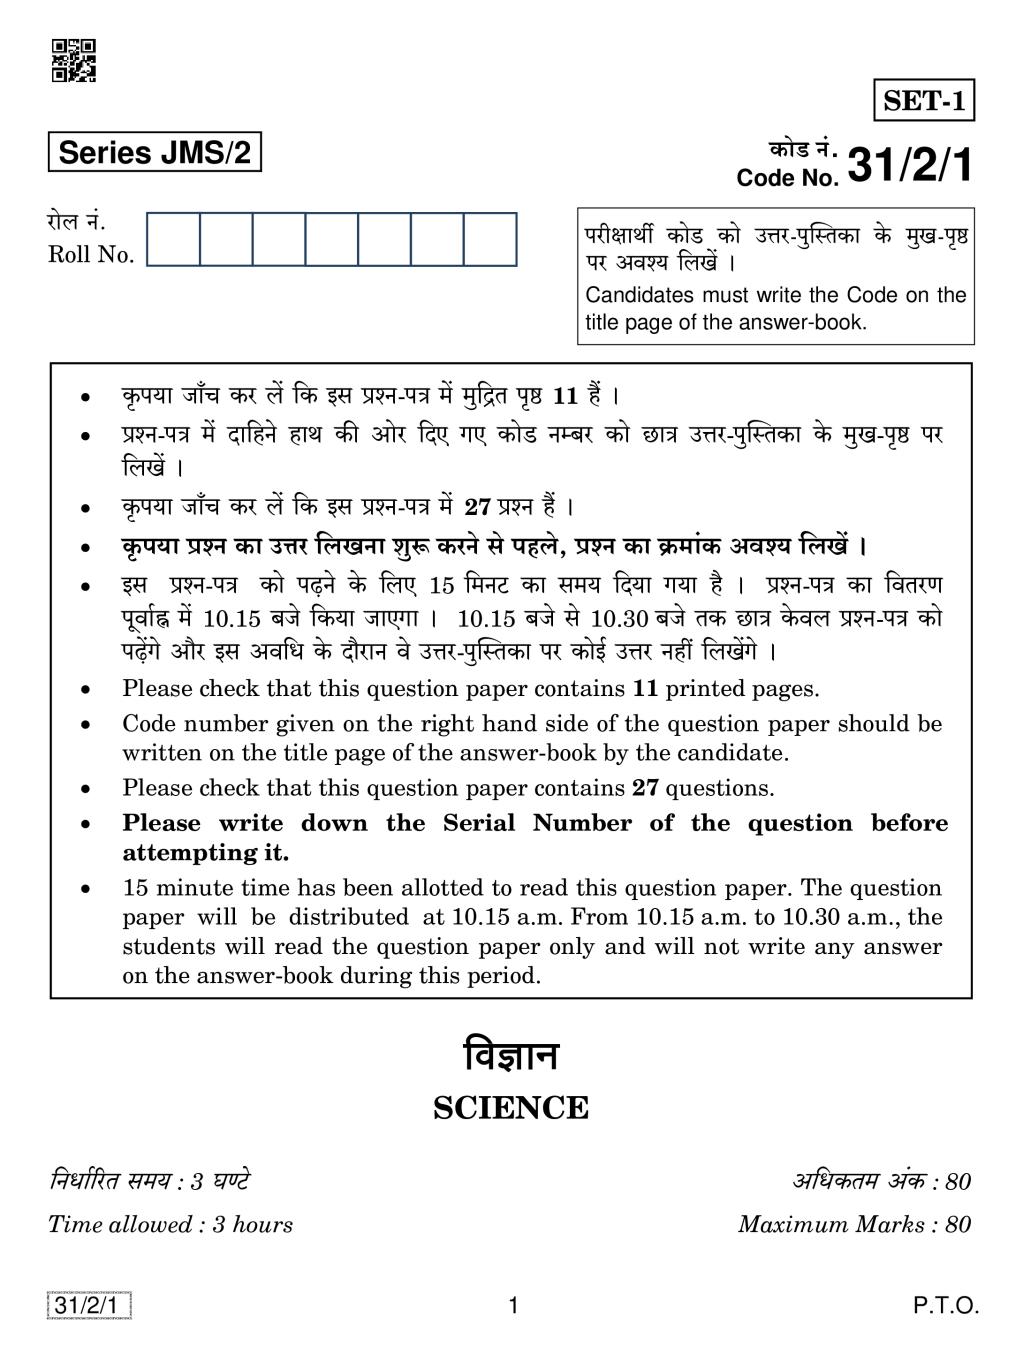 CBSE Class 10 Science Question Paper 2019 Set 2 - Page 1